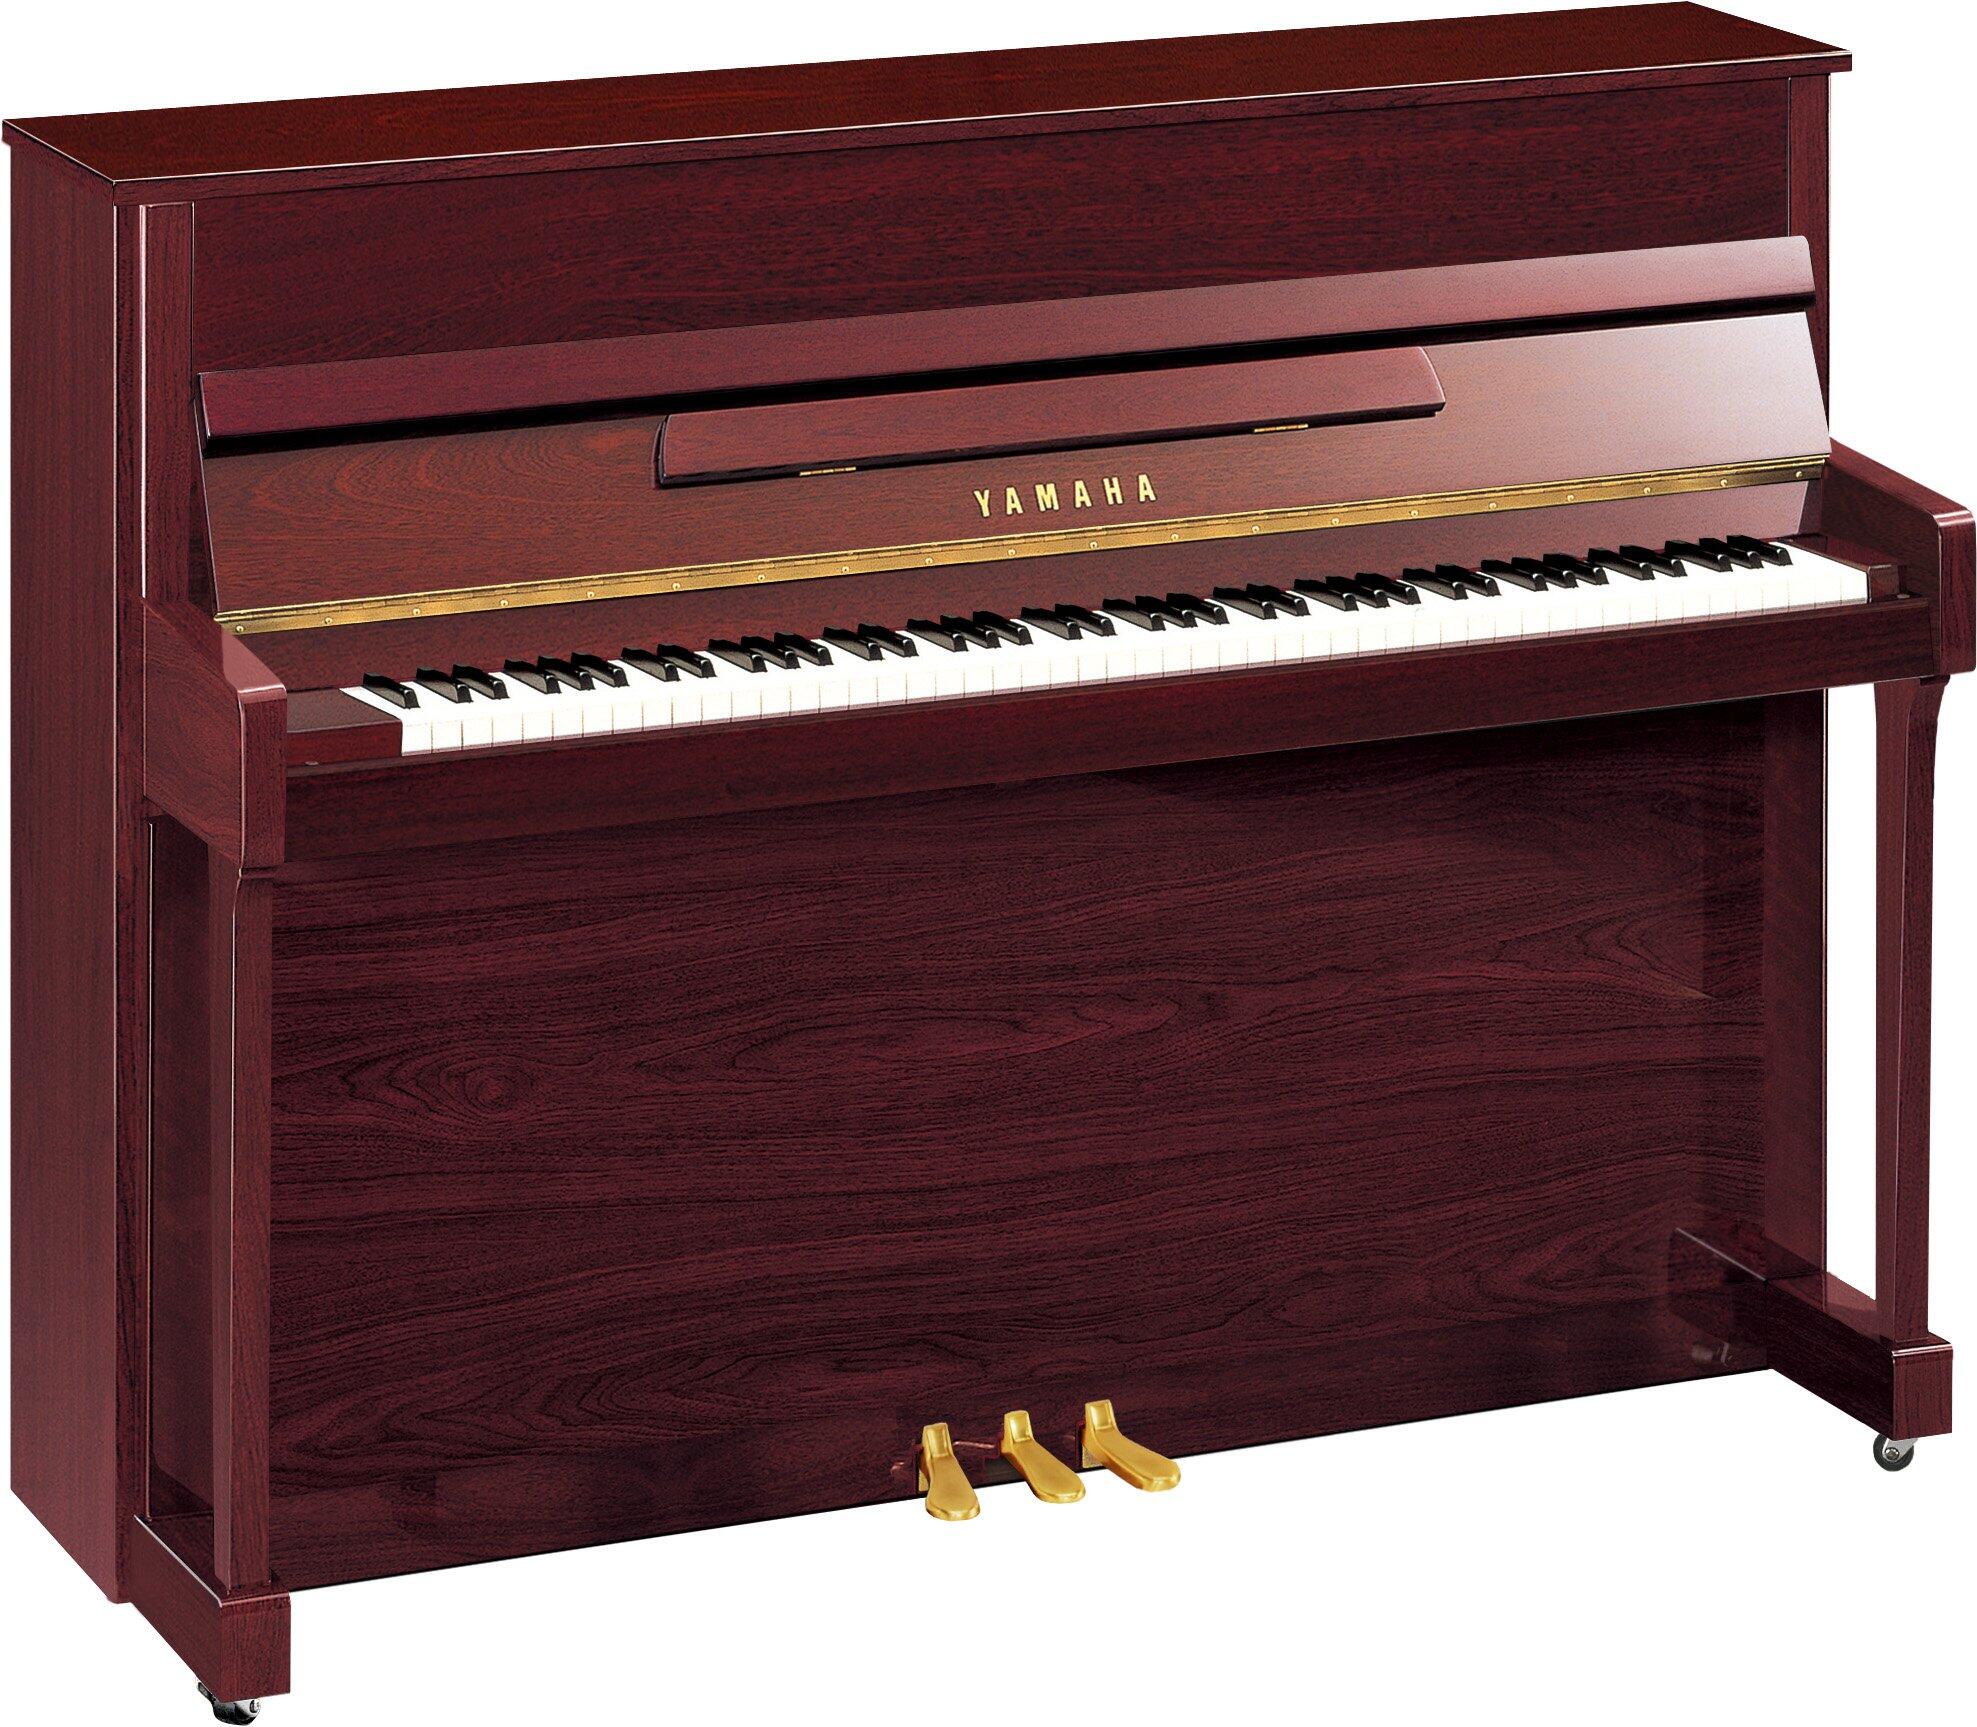 Yamaha Pianos Silent B2 SC3 PM Silent Acajou poli-brillant 113 cm : photo 1